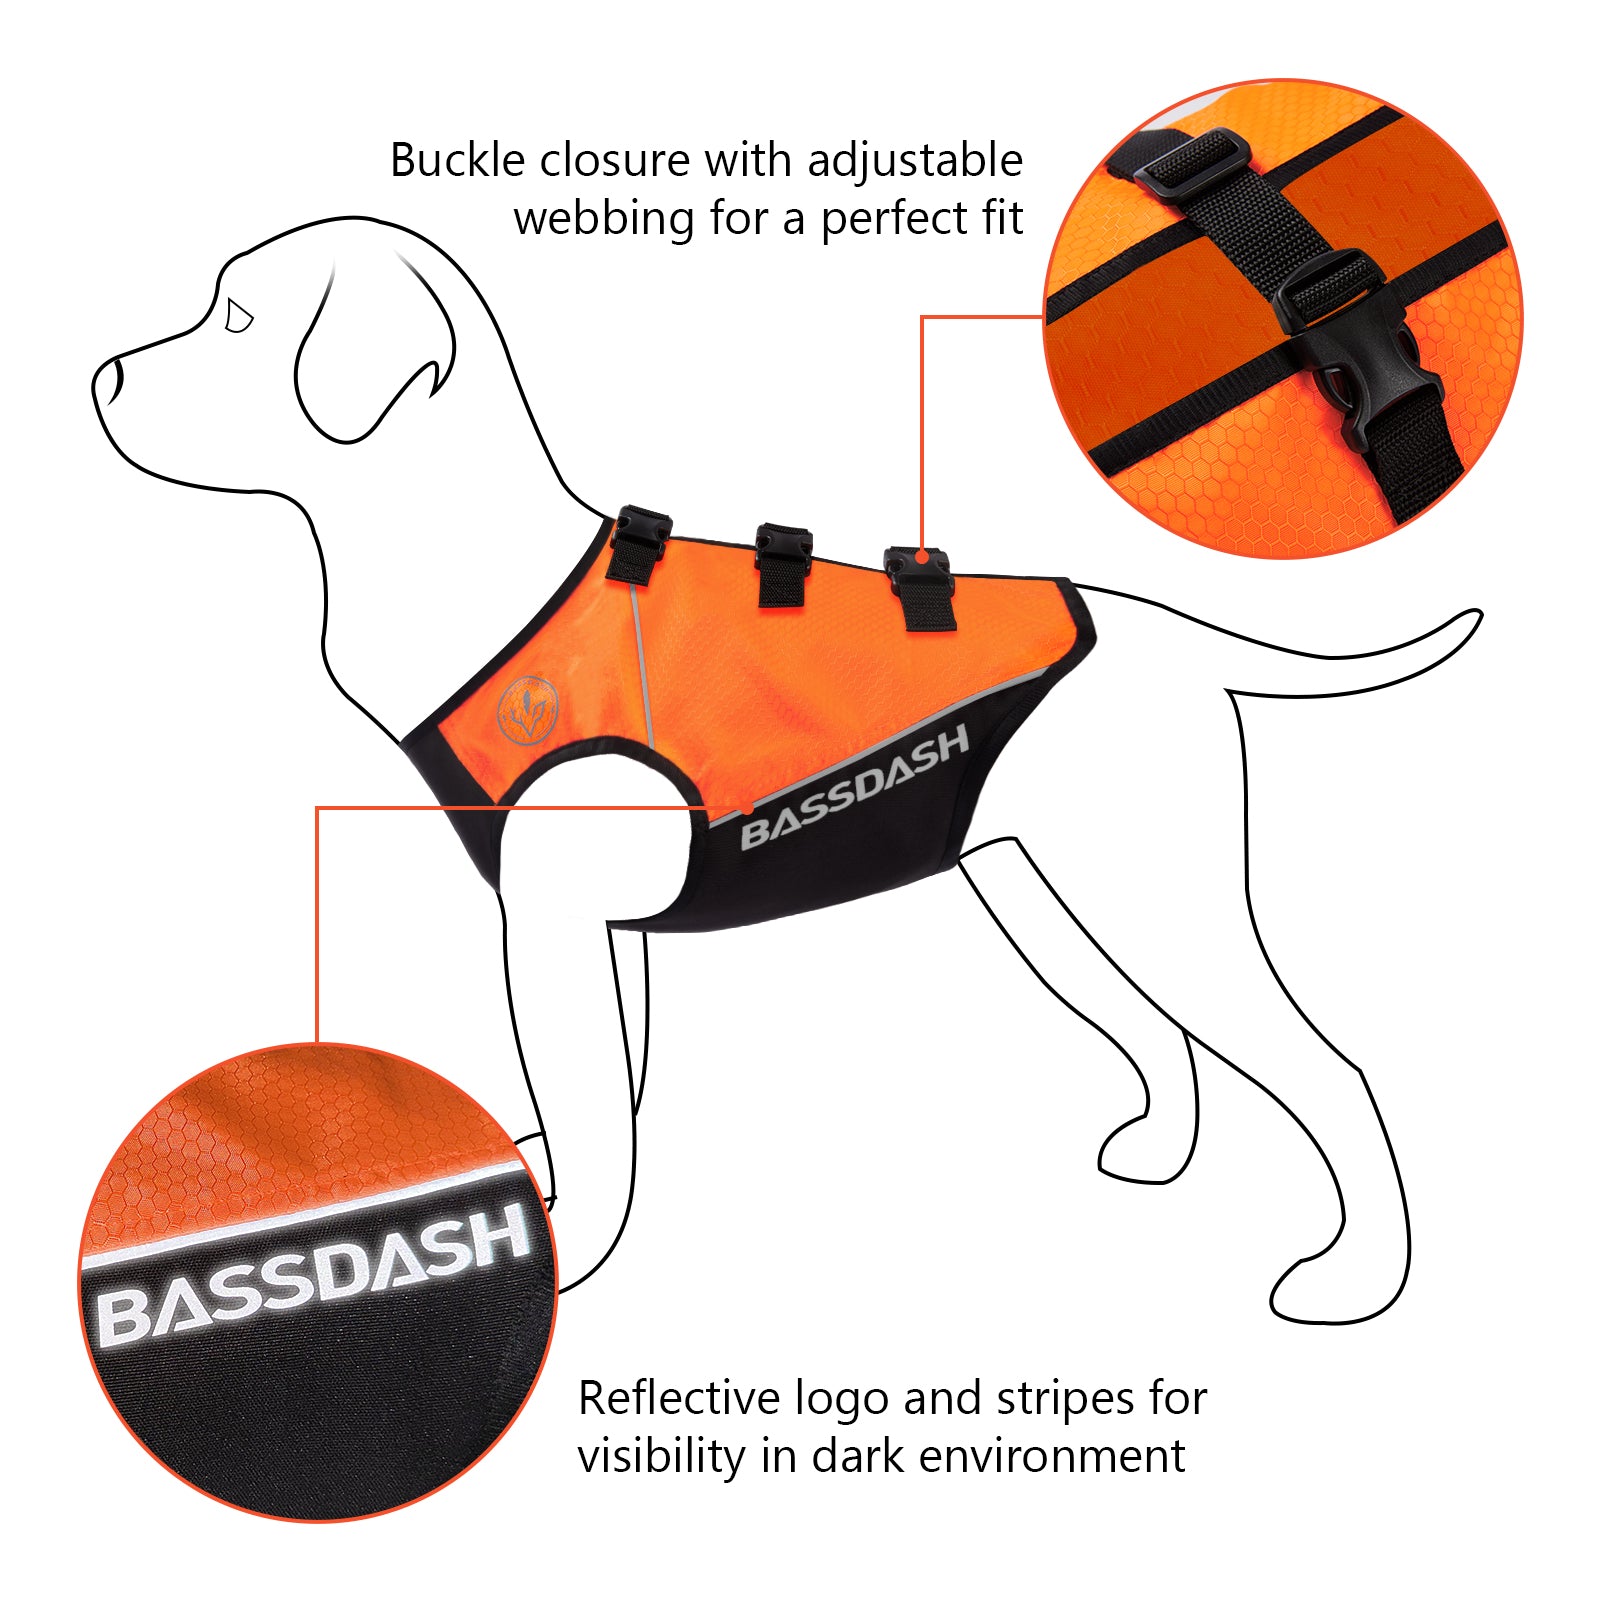 Dog Safety Vest FV13